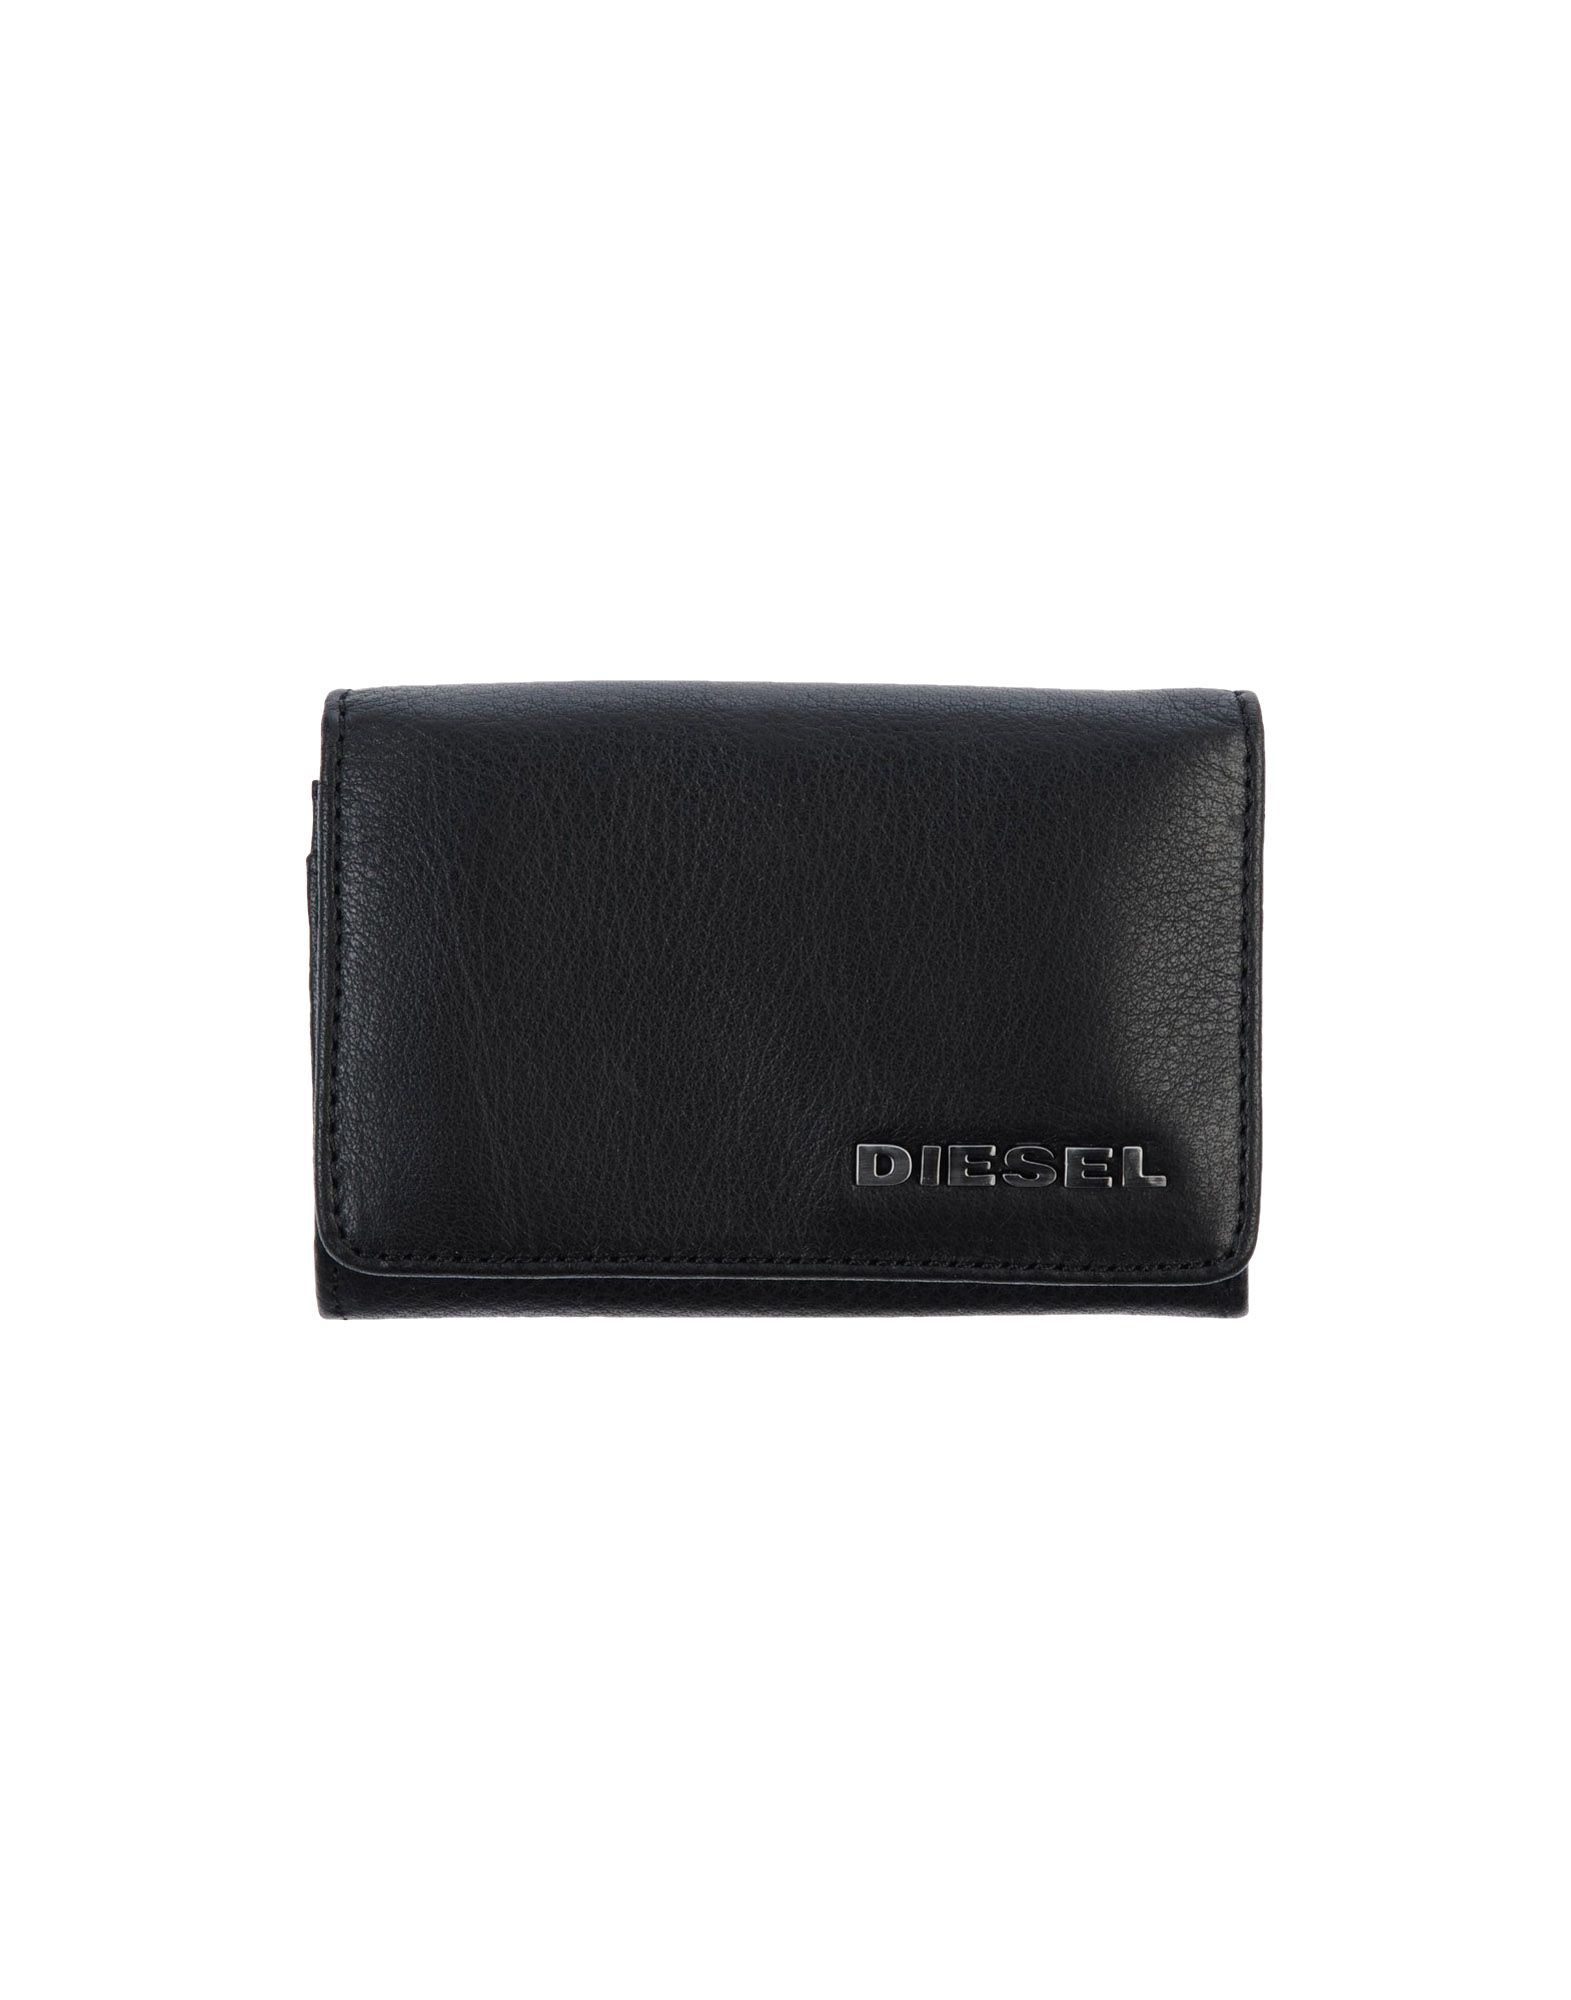 Diesel Wallet in Black for Men | Lyst